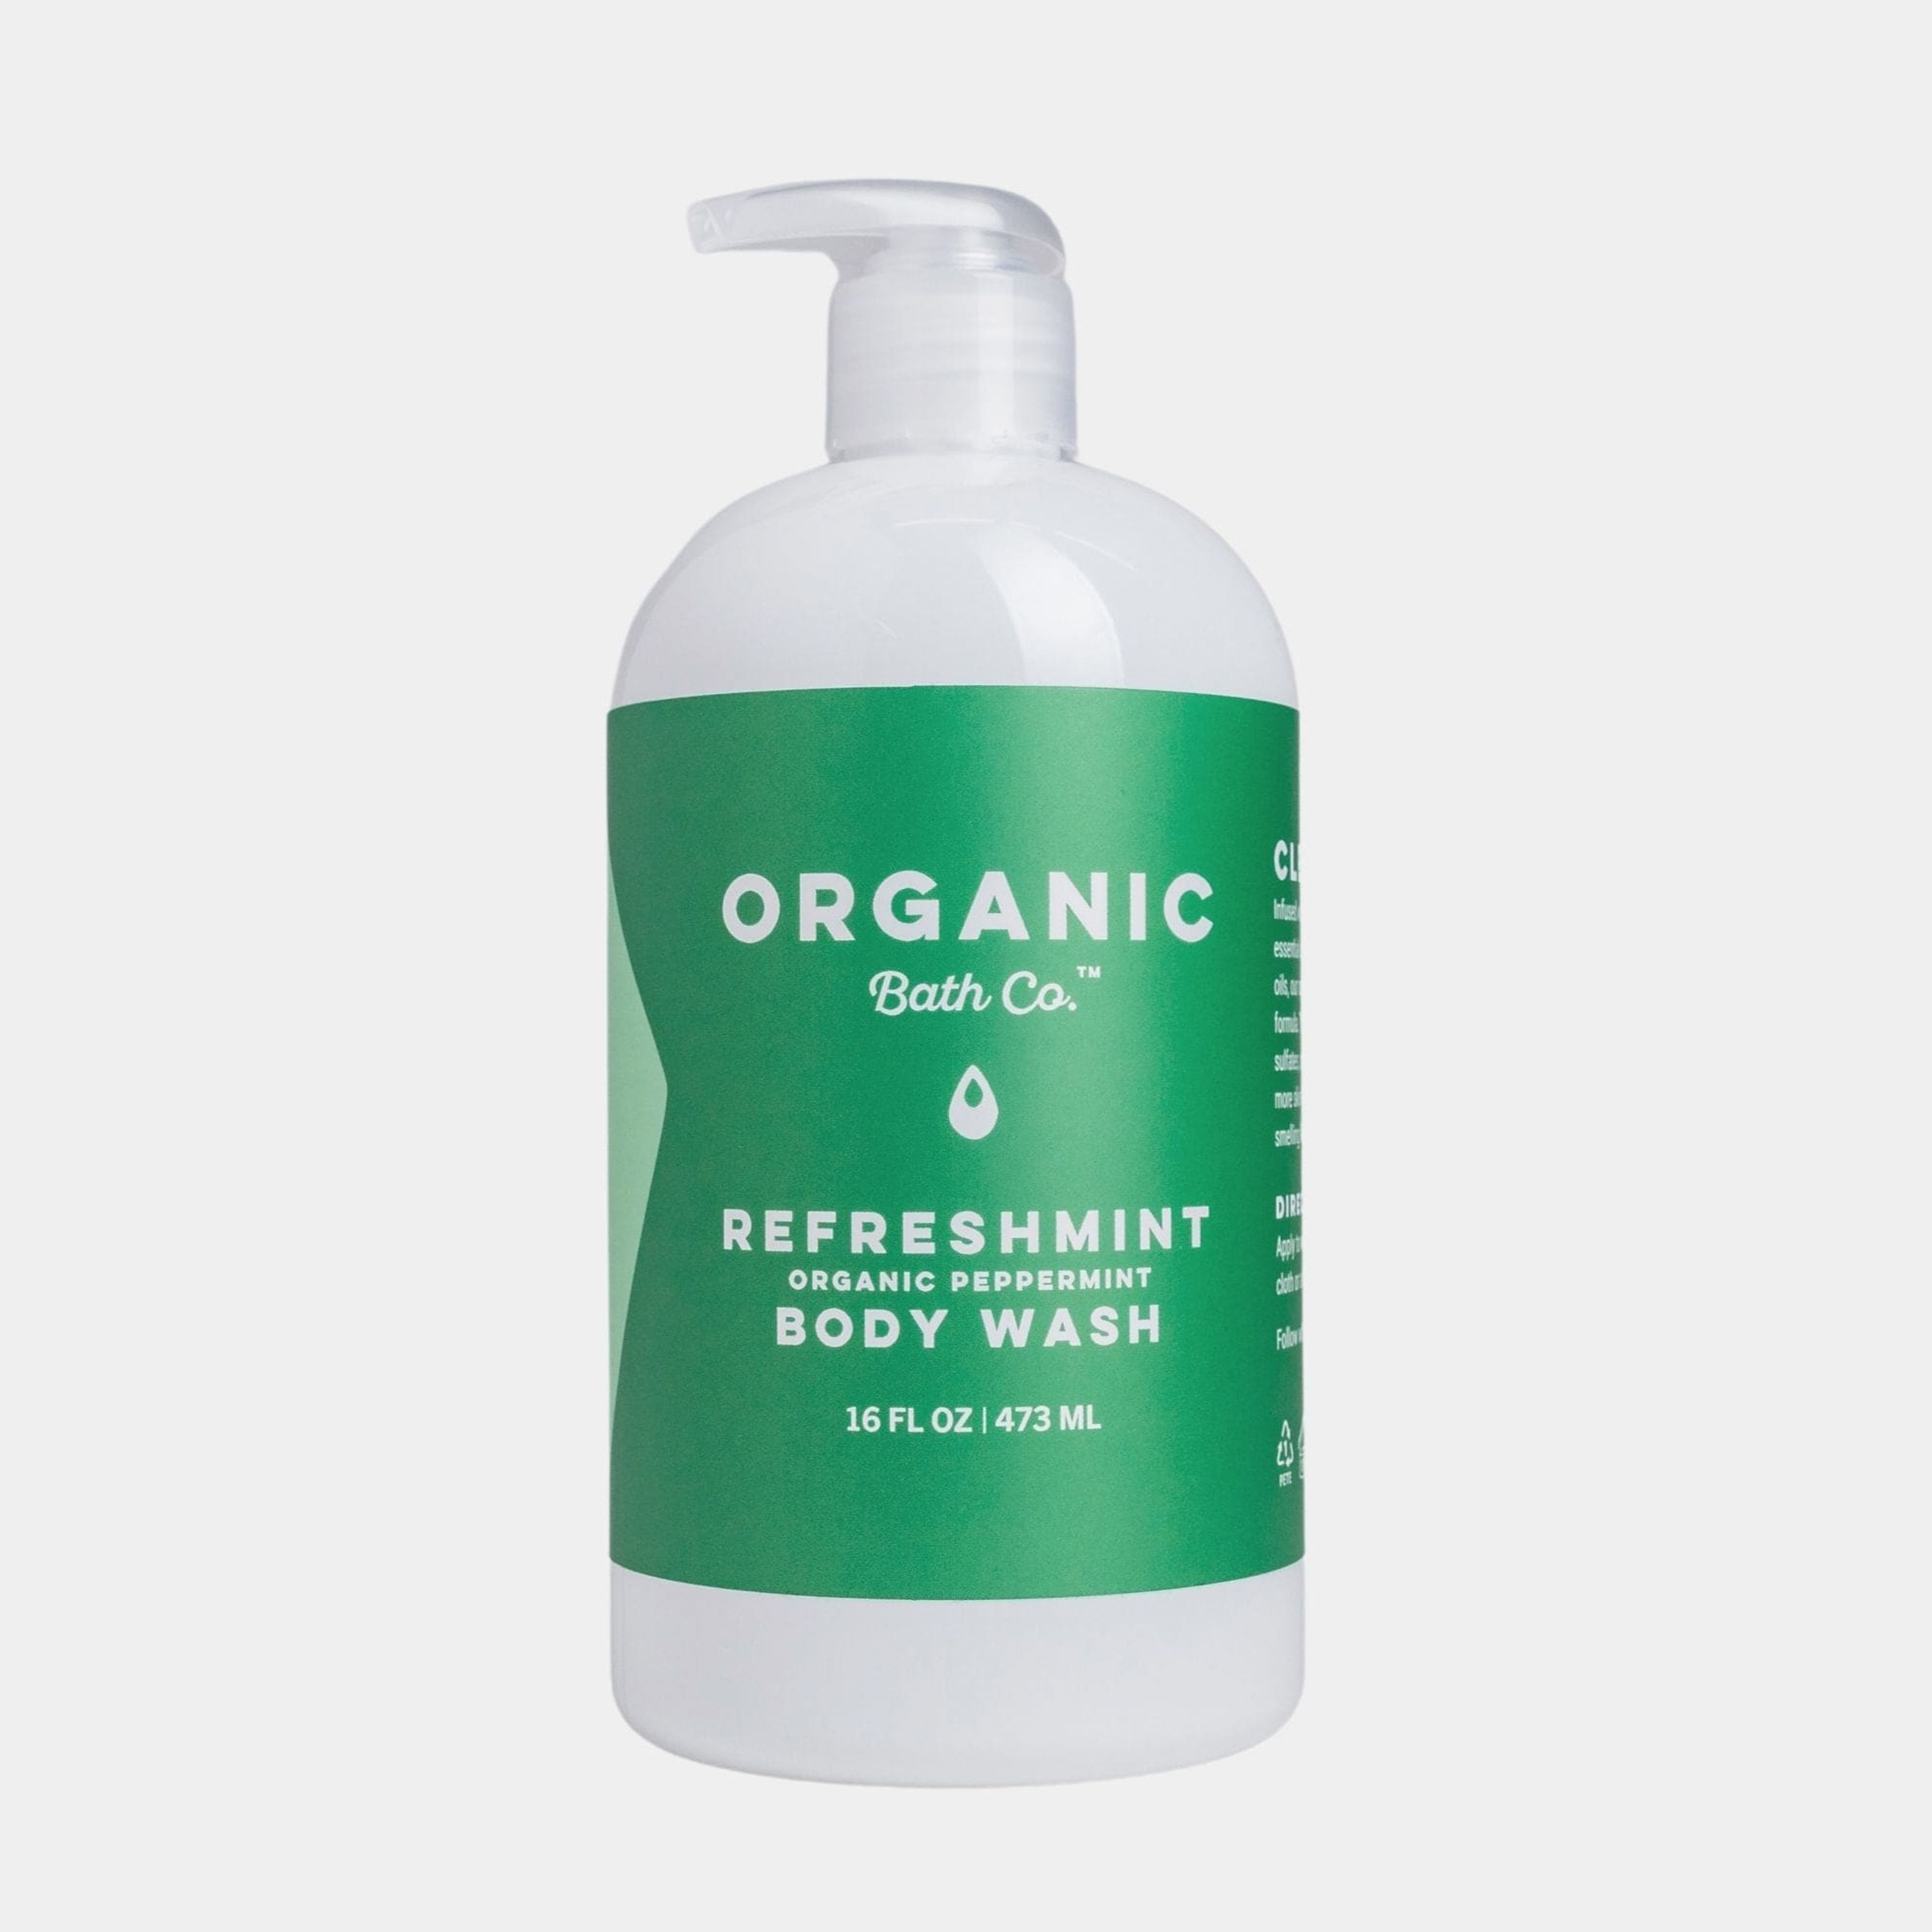 RefreshMint Organic Body Wash